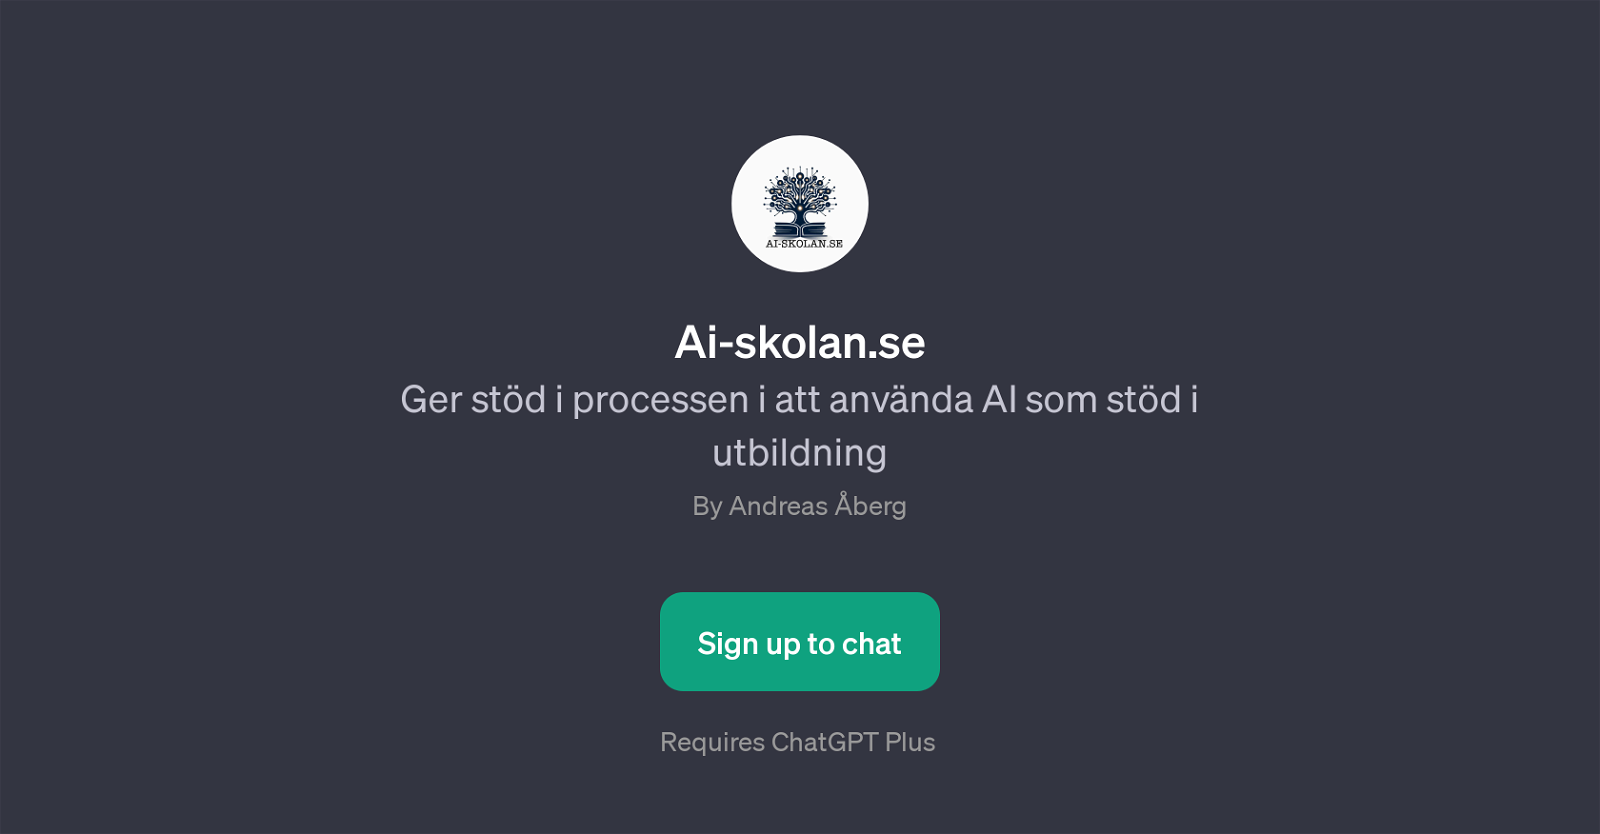 Ai-skolan.se website